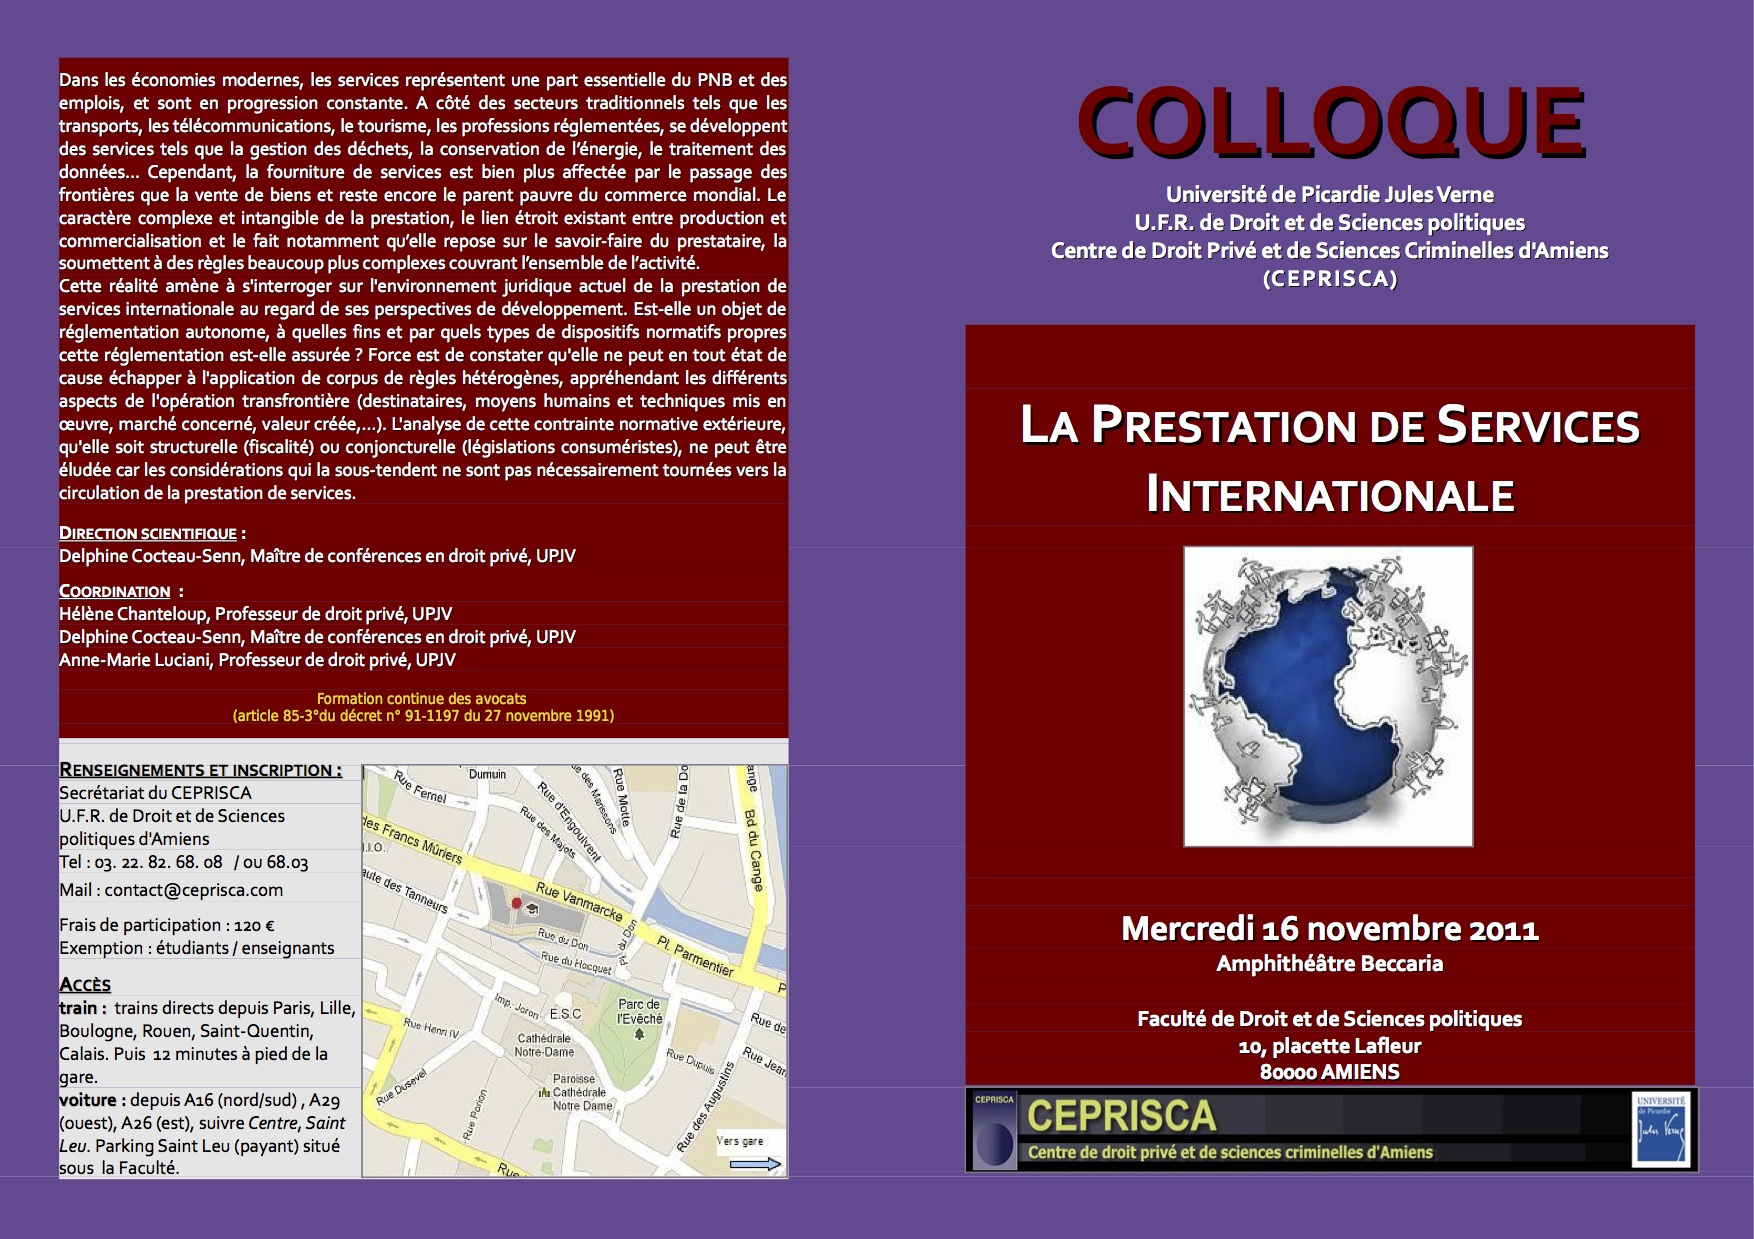 CEPRISCA-_Programme-_La_Prestation_de_Services_internationale-_16_novembre_2011